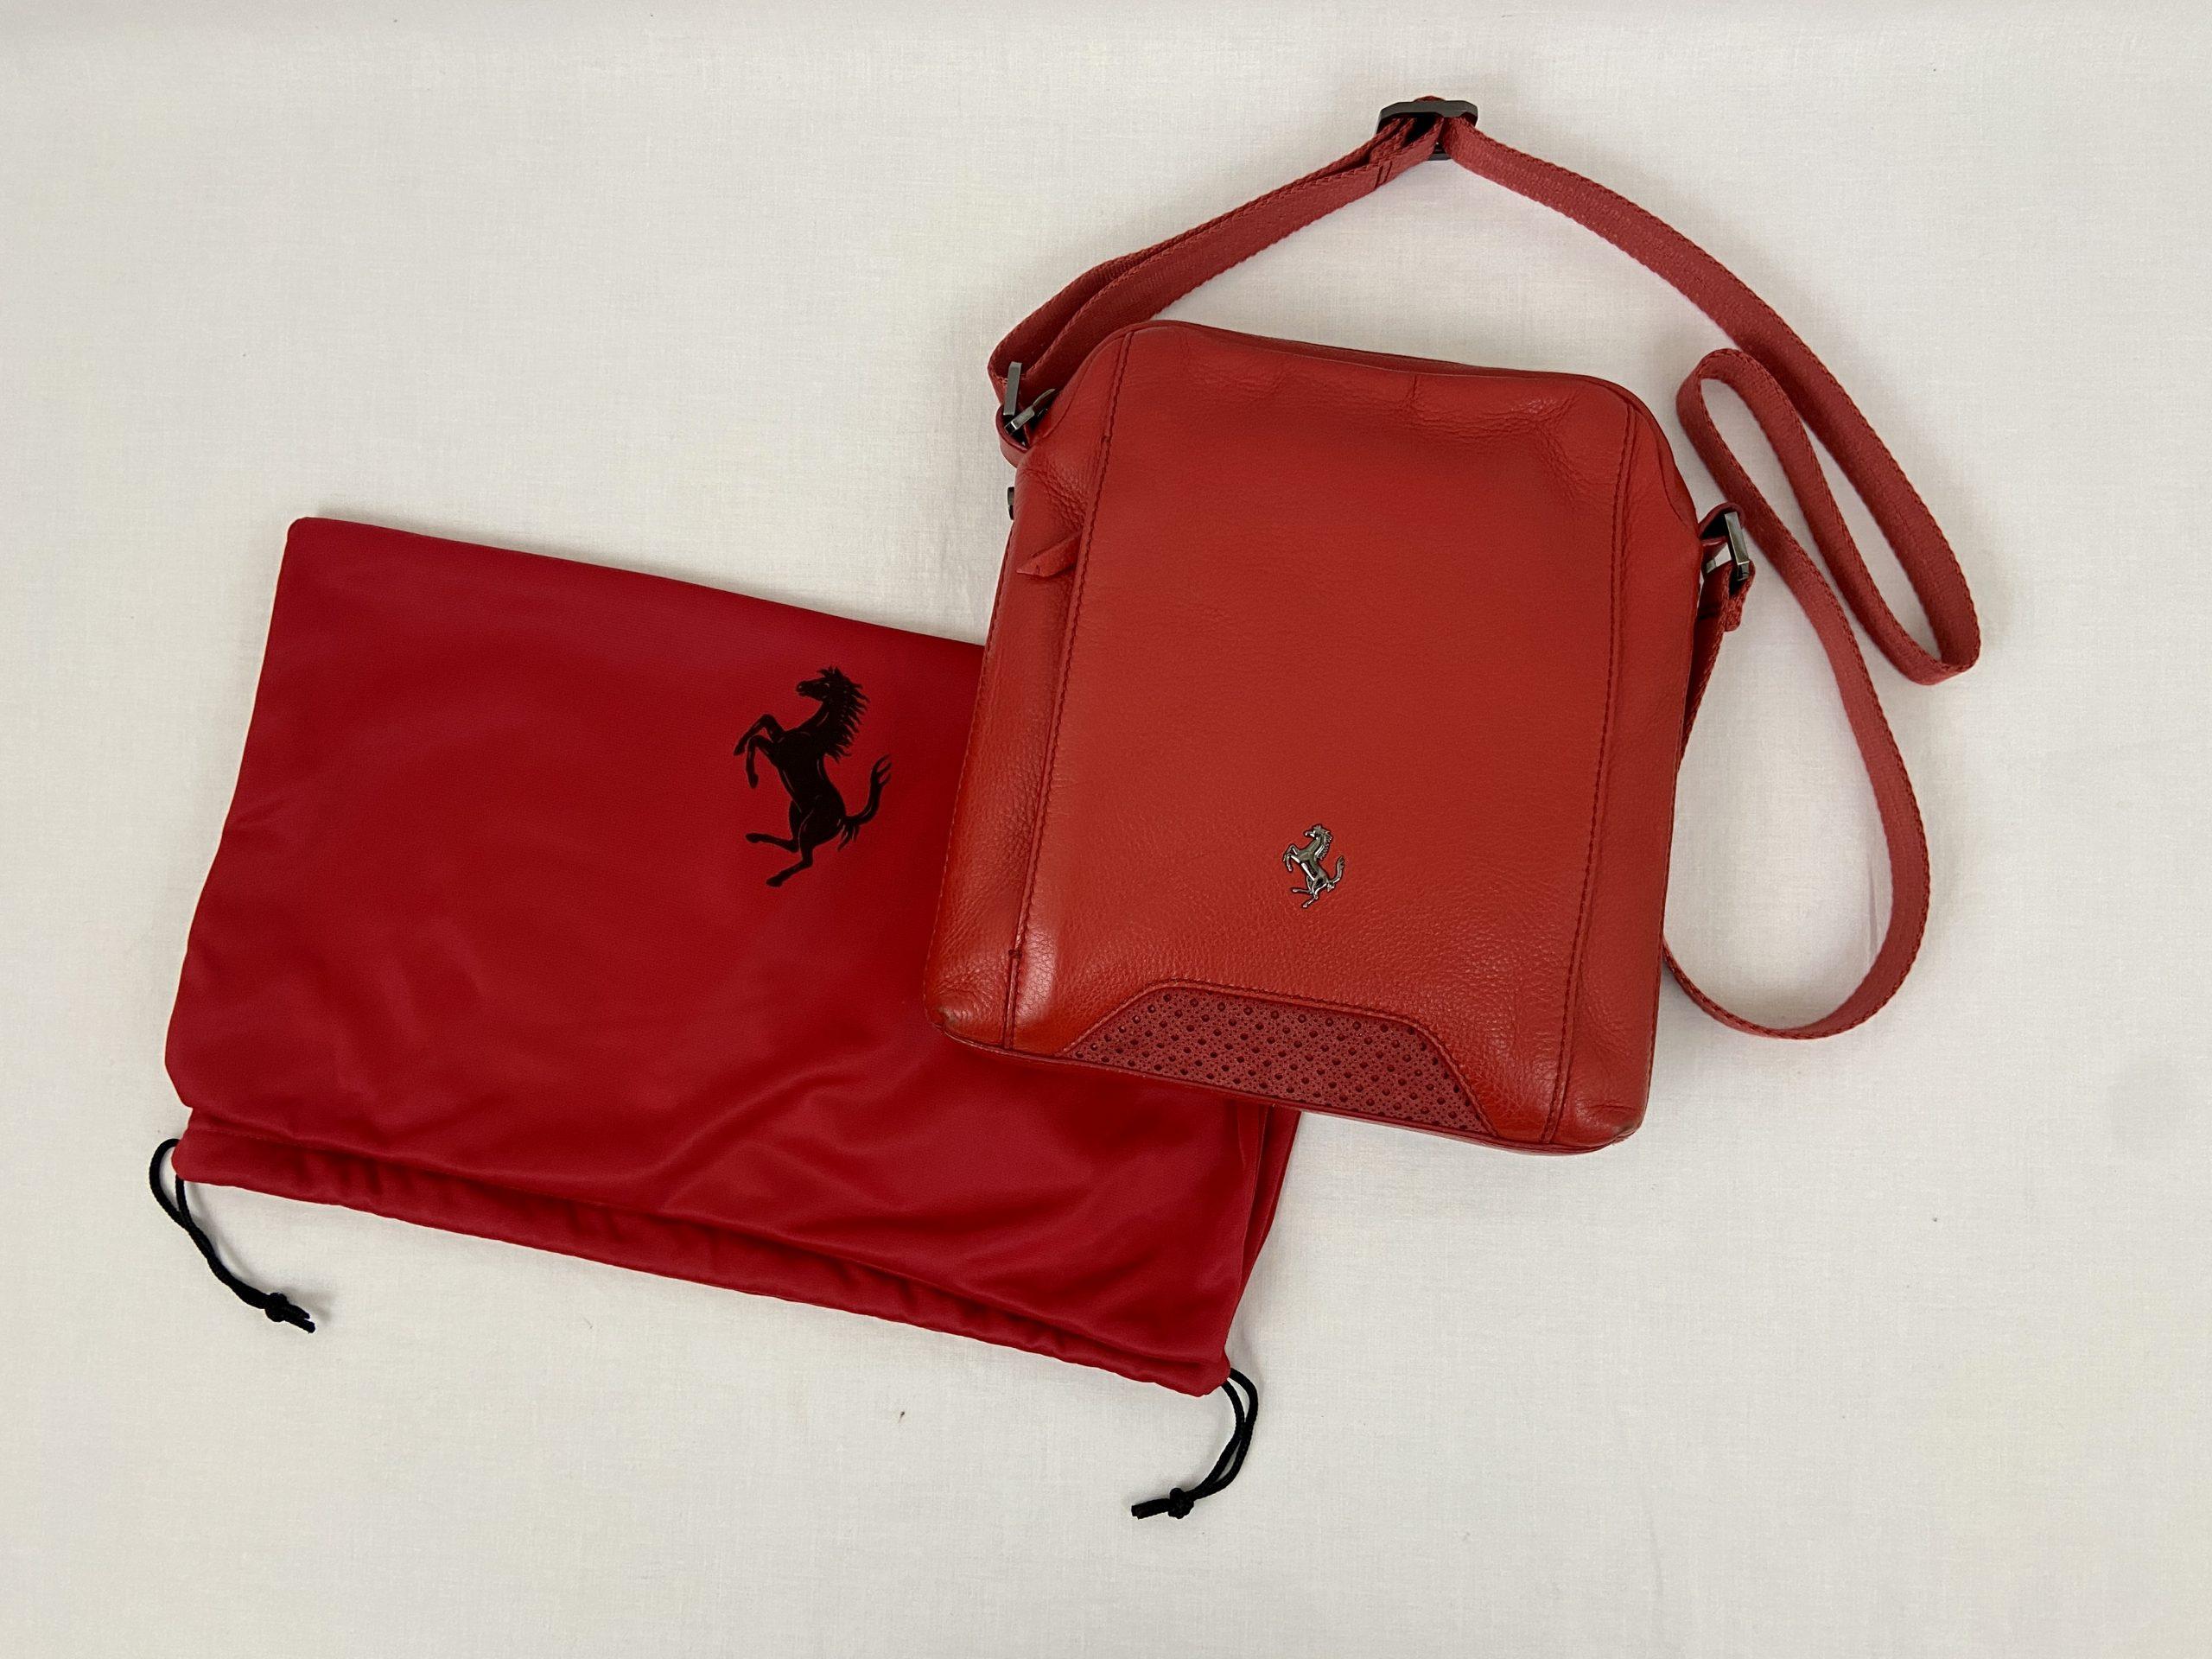 Ferrari Women's Bags and Luggage| Ferrari Store